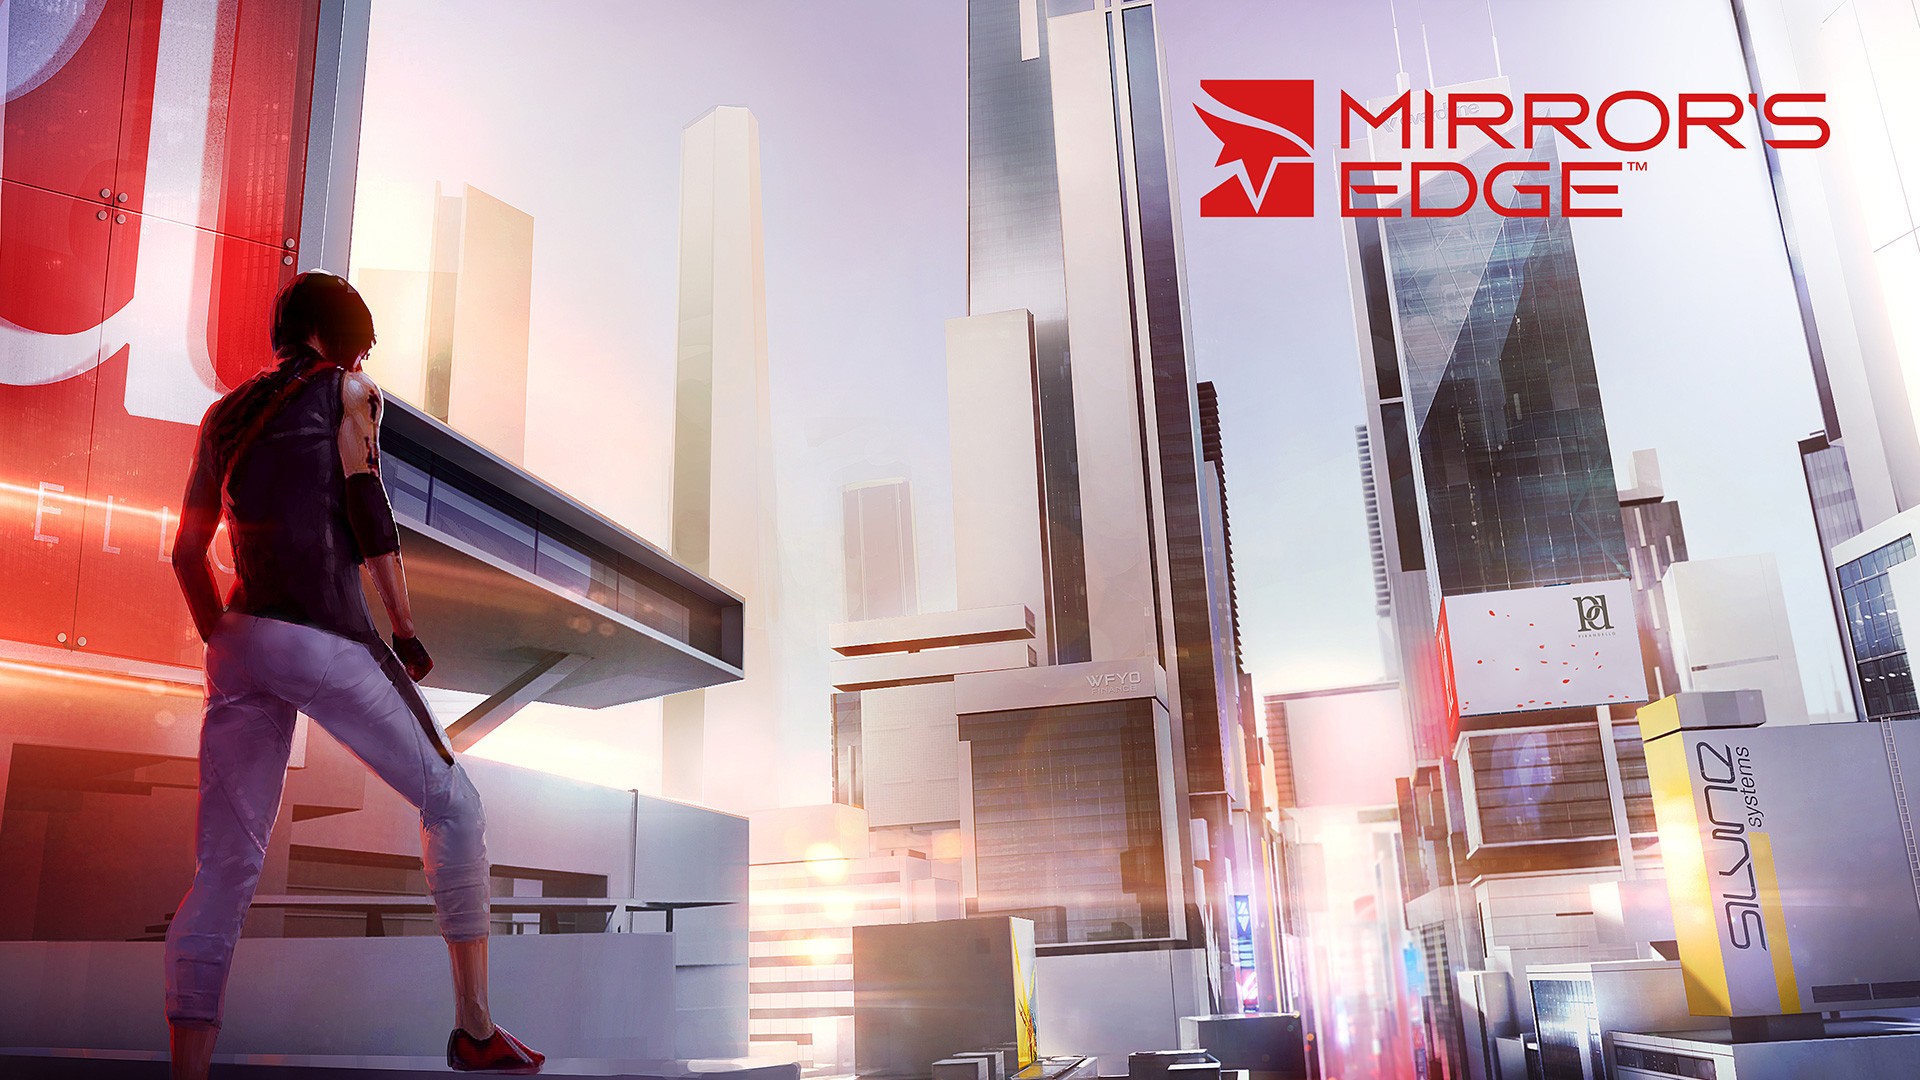 Mirrors Edge Catalyst, Video Games, Concept Art Wallpaper